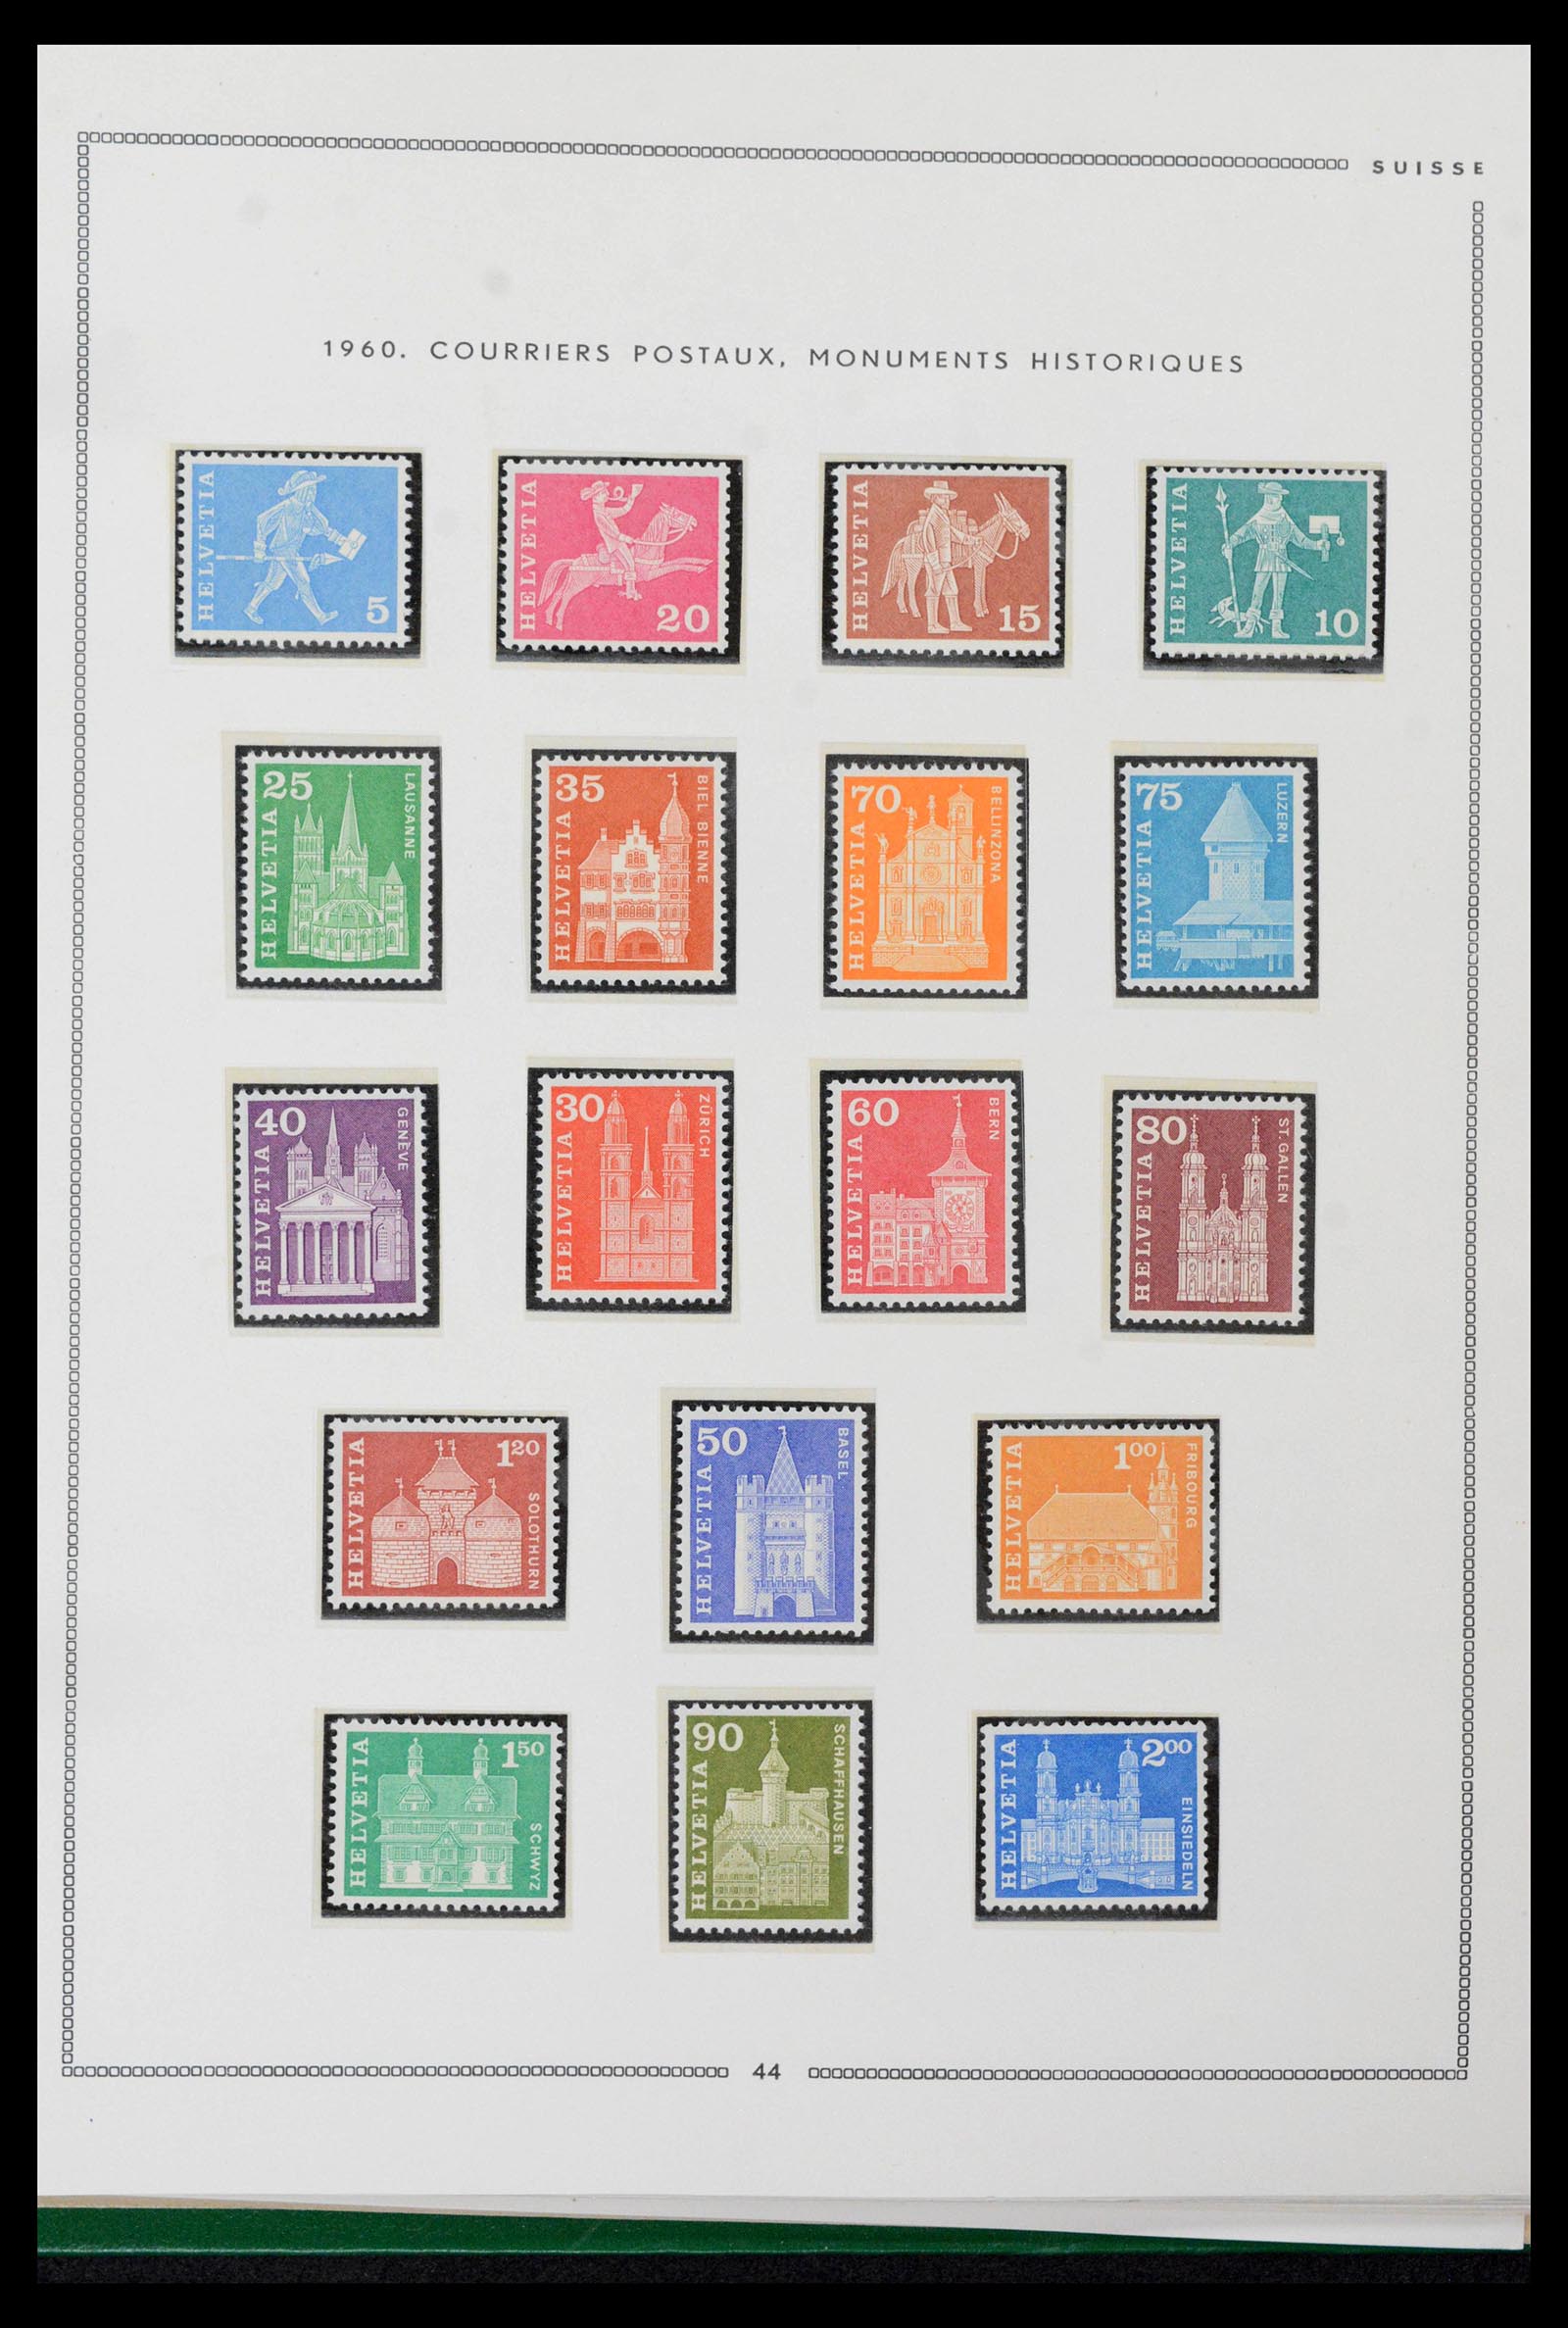 39096 0039 - Stamp collection 39096 Switzerland 1907-1963.